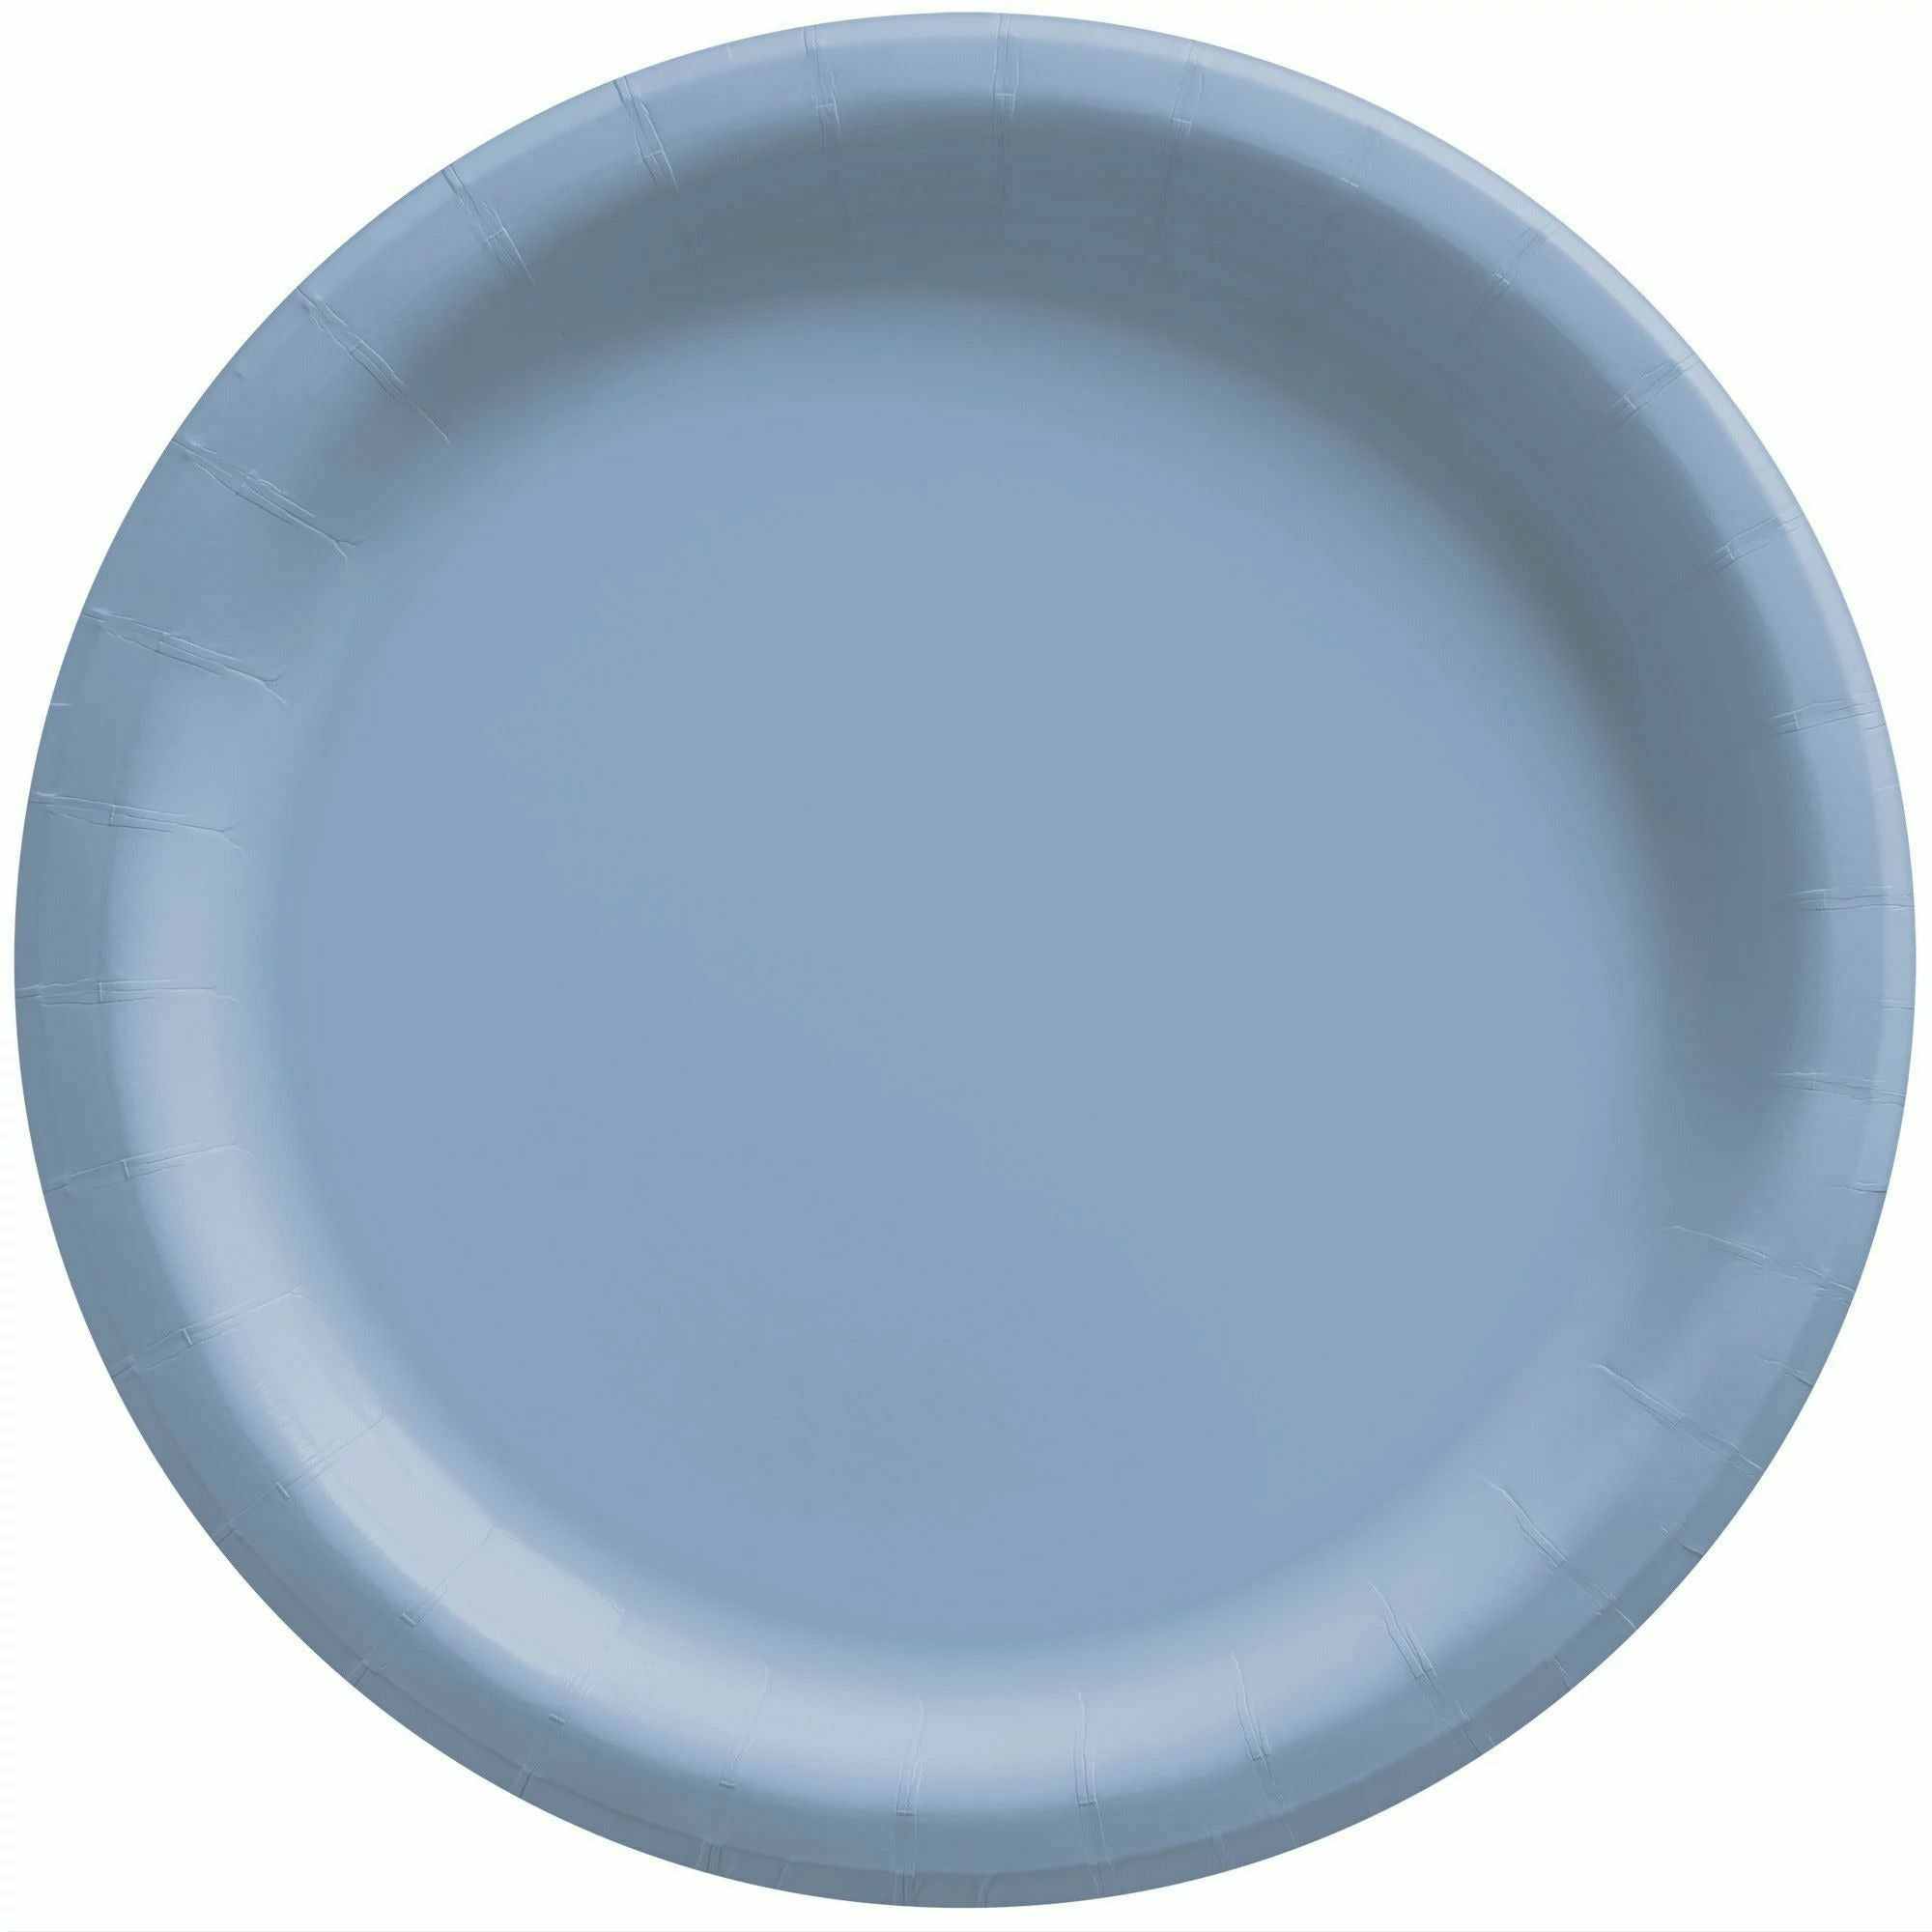 Amscan BASIC Pastel Blue - 6 3/4" Round Paper Plates, 20 Ct.